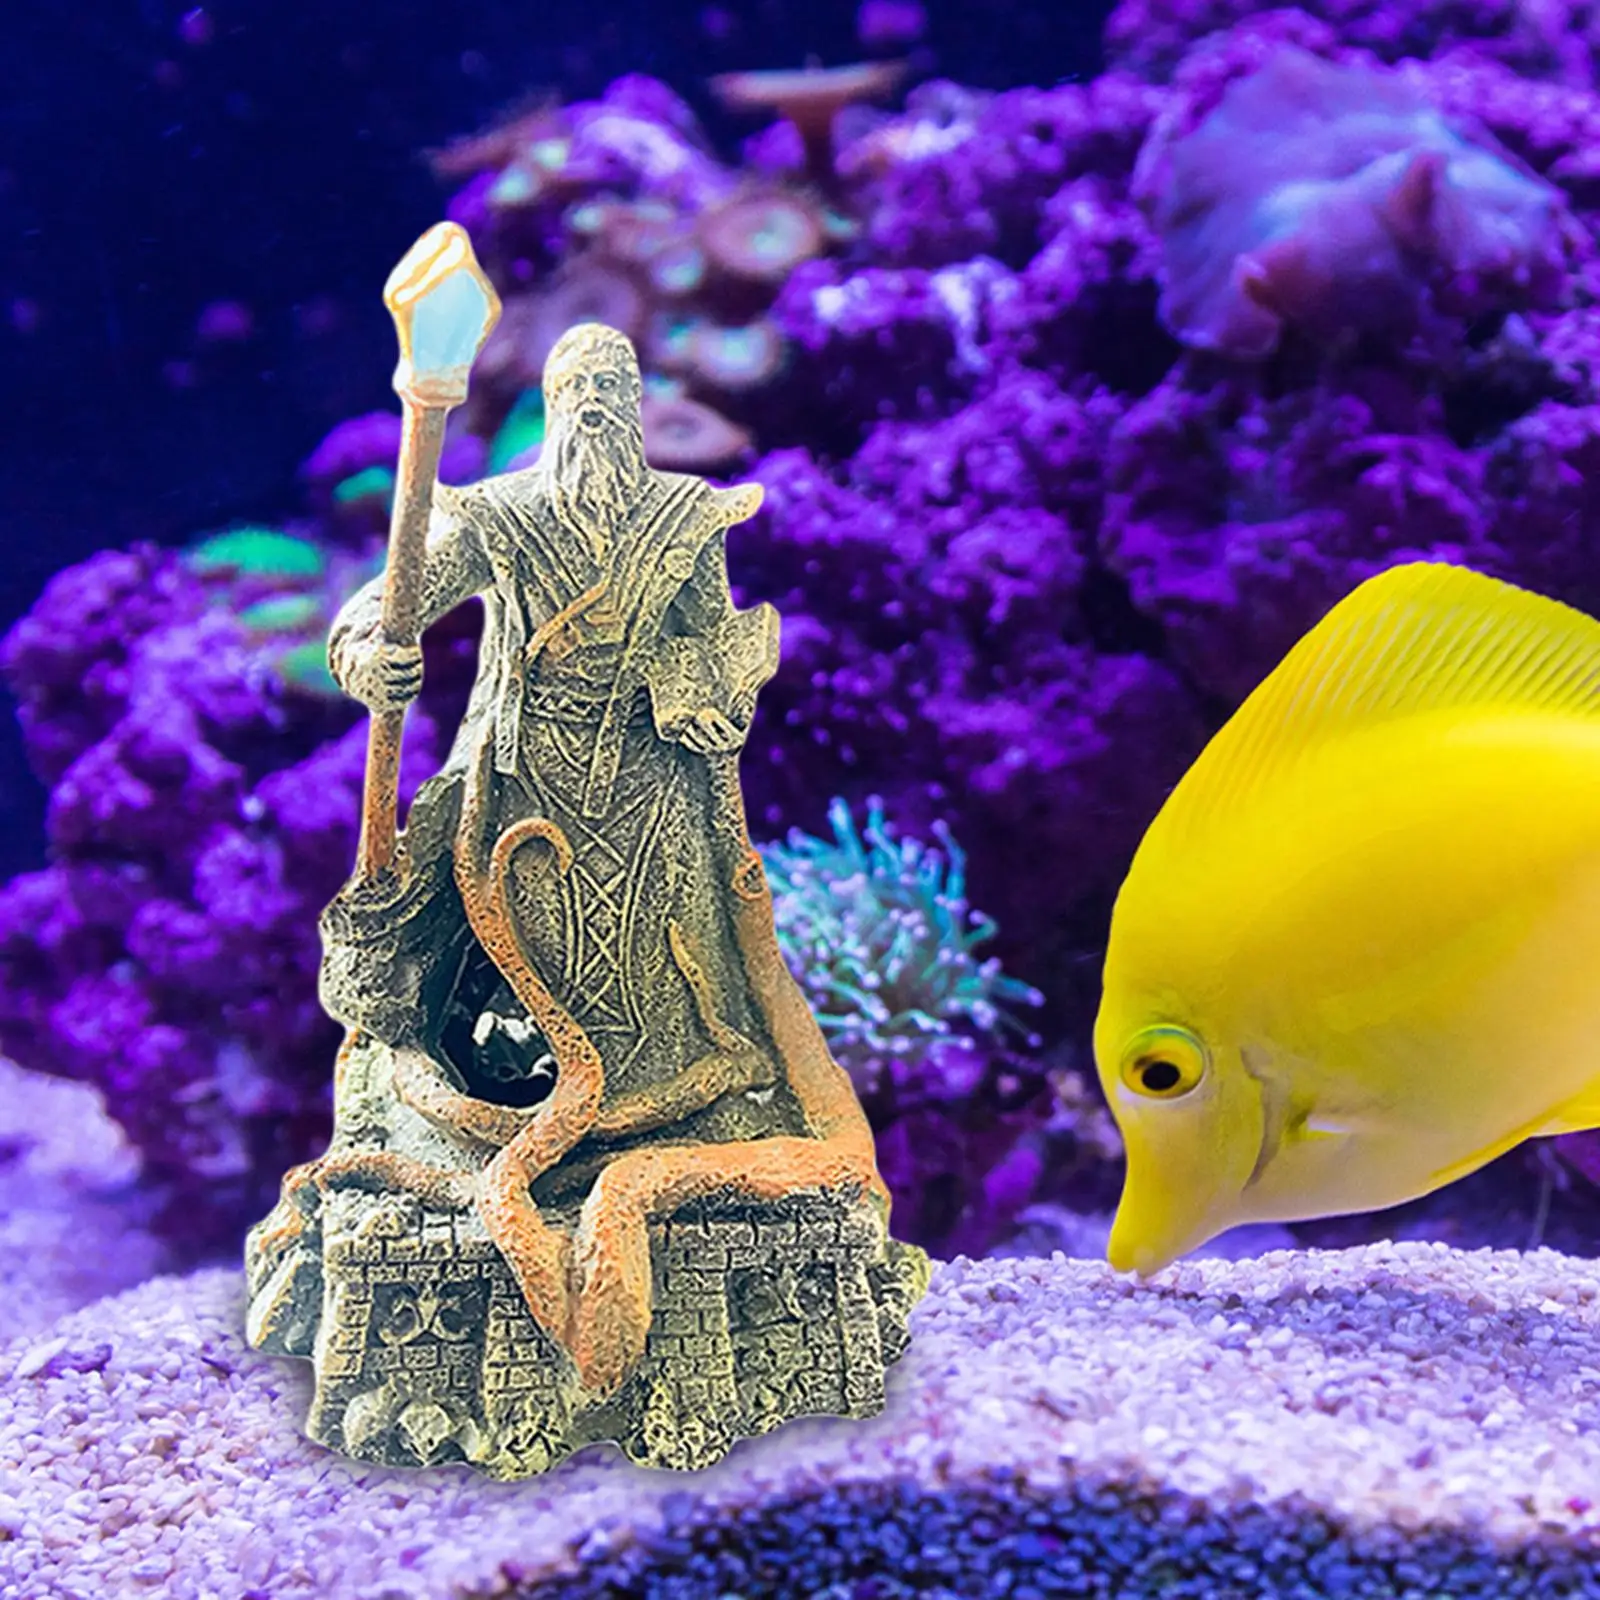 Aquarium Decoration Mage Figurine Craft Landscaping Fish Tank Decor Tabletop Statue Hiding Cave for Shelf Porch Patio Yard Gift